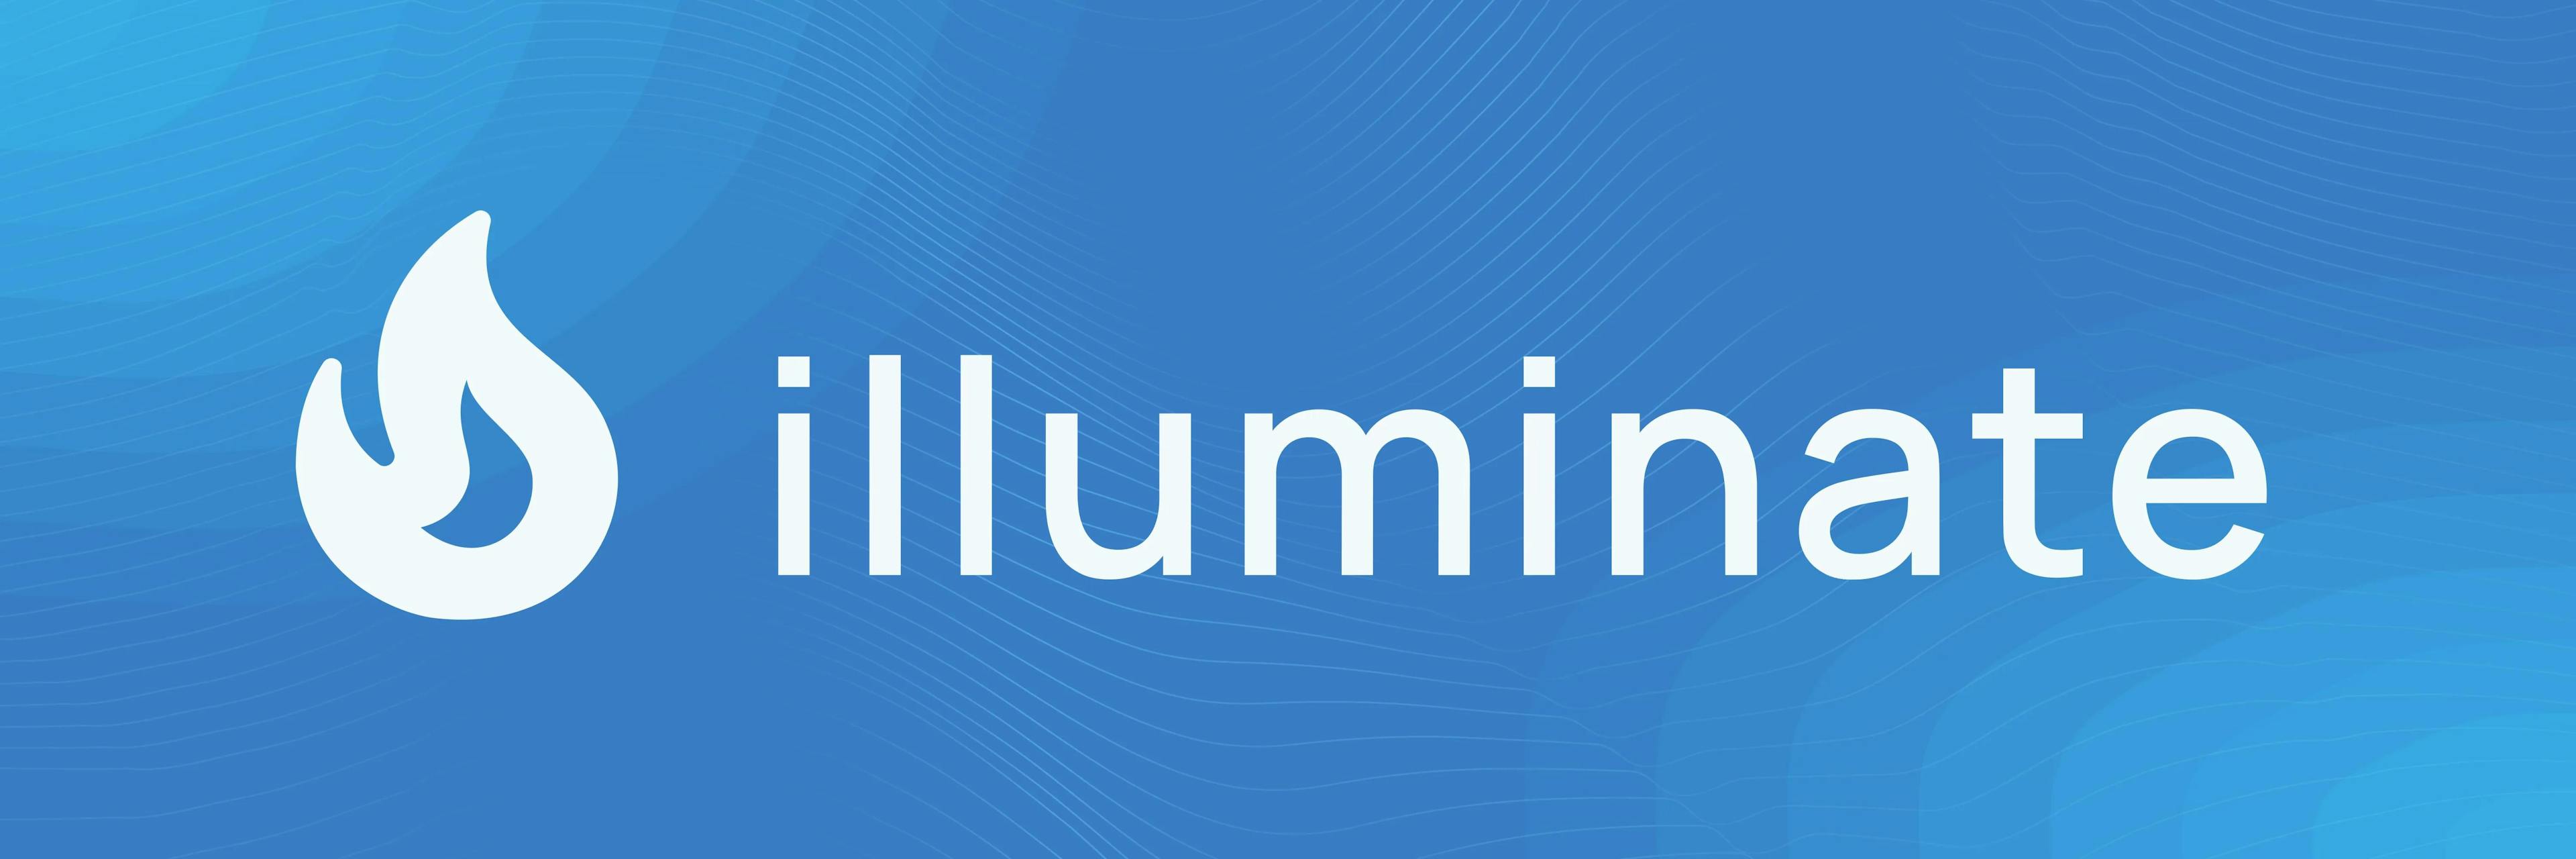 Illuminate Finance Brand Banner